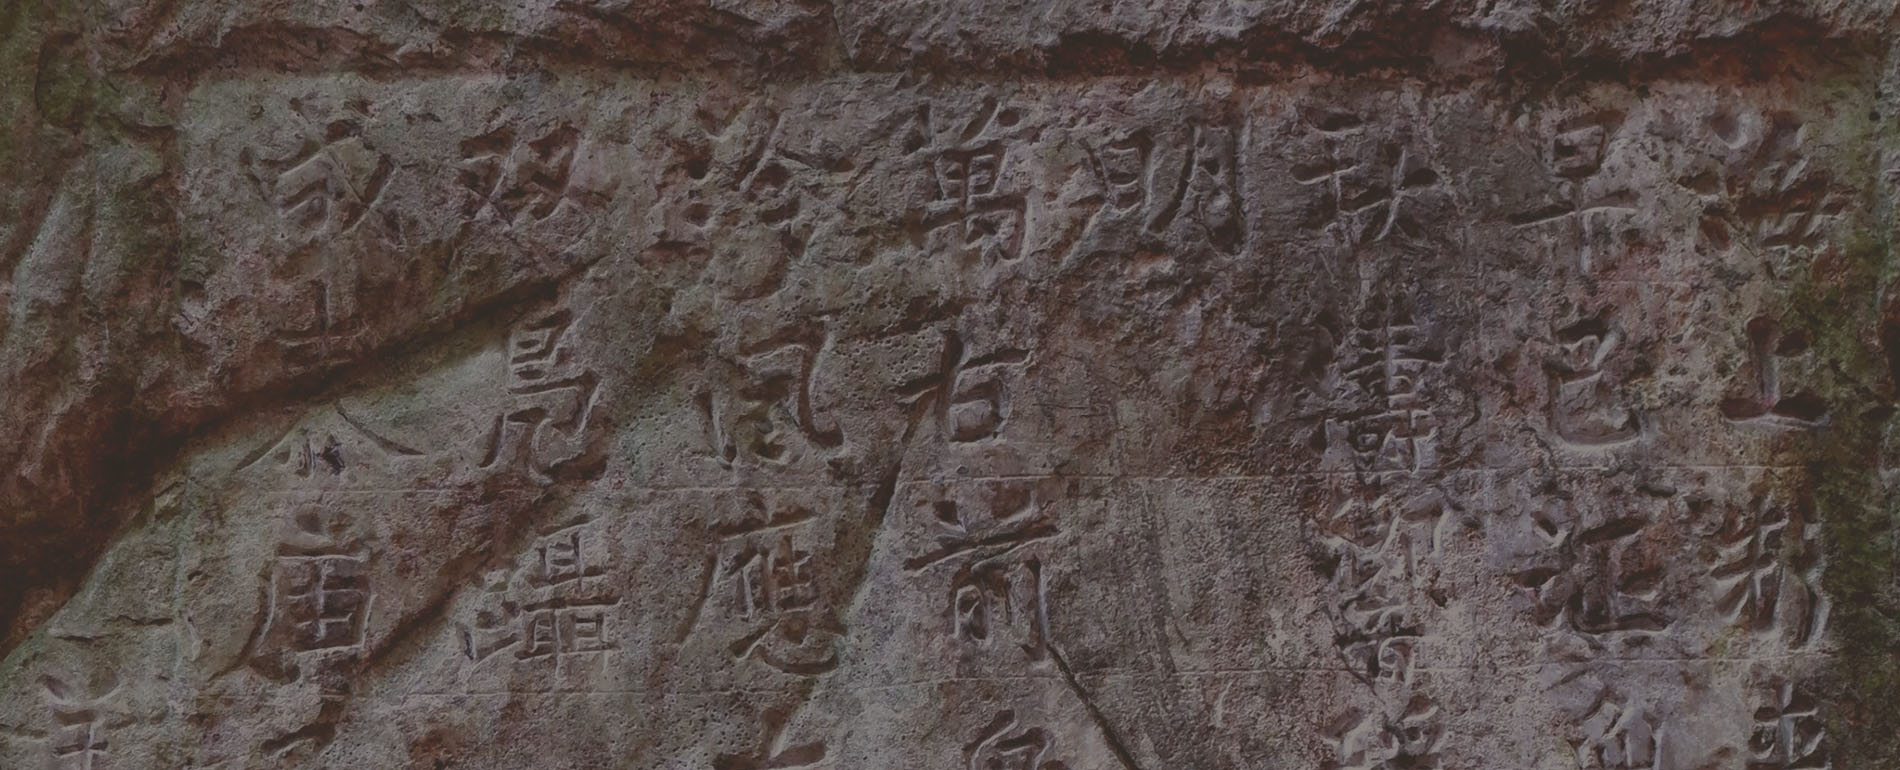 Inscription Hai Thuong Phi Lai